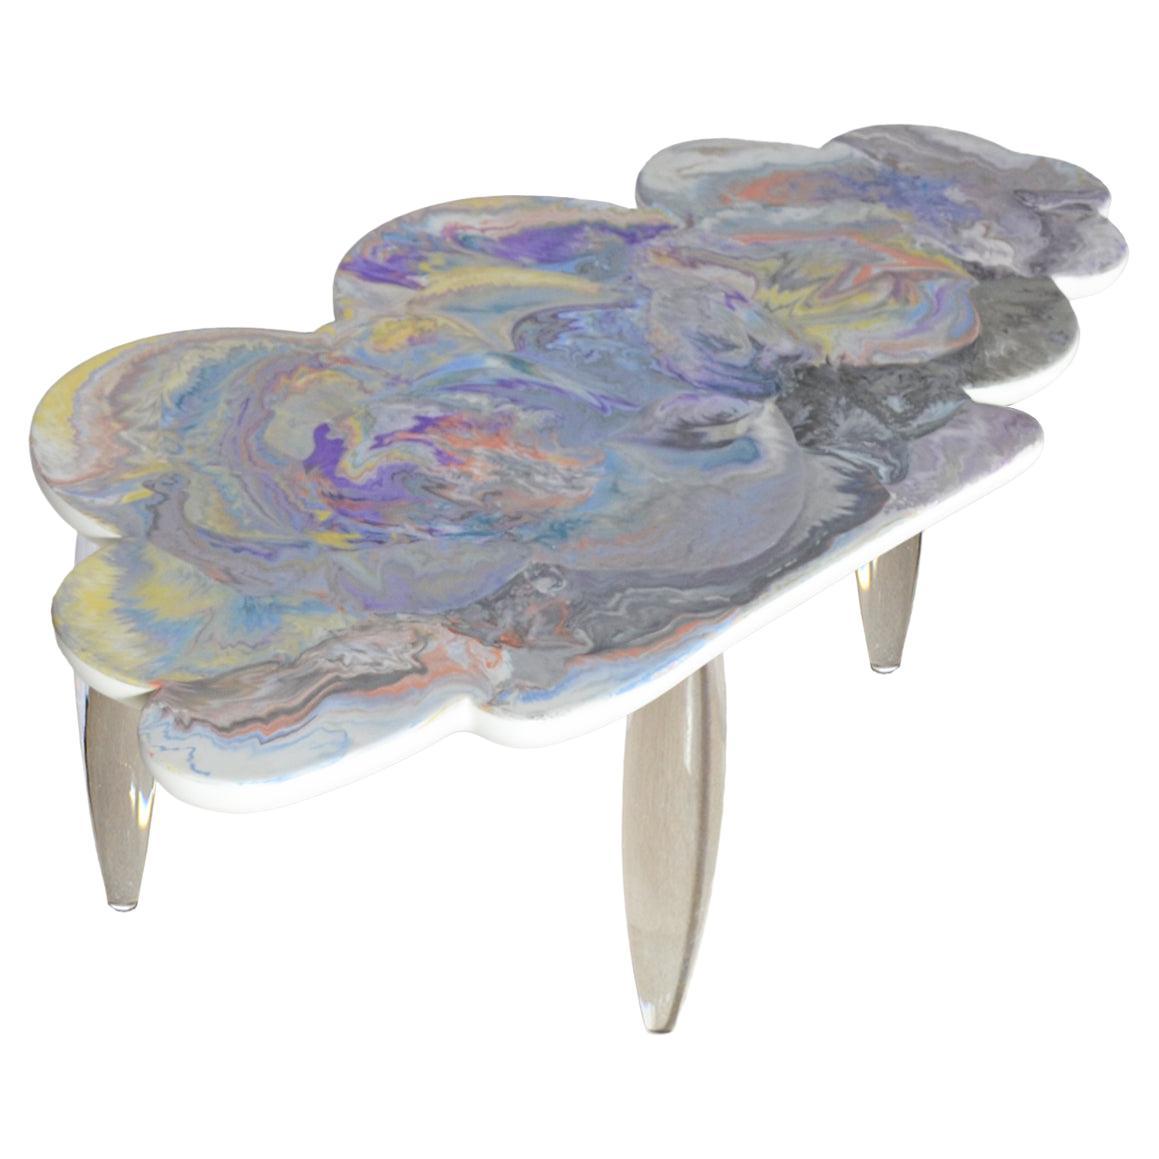 Cupioli Cloud Coffee Table Scagliola art top  plexiglass legs handmade in Italy